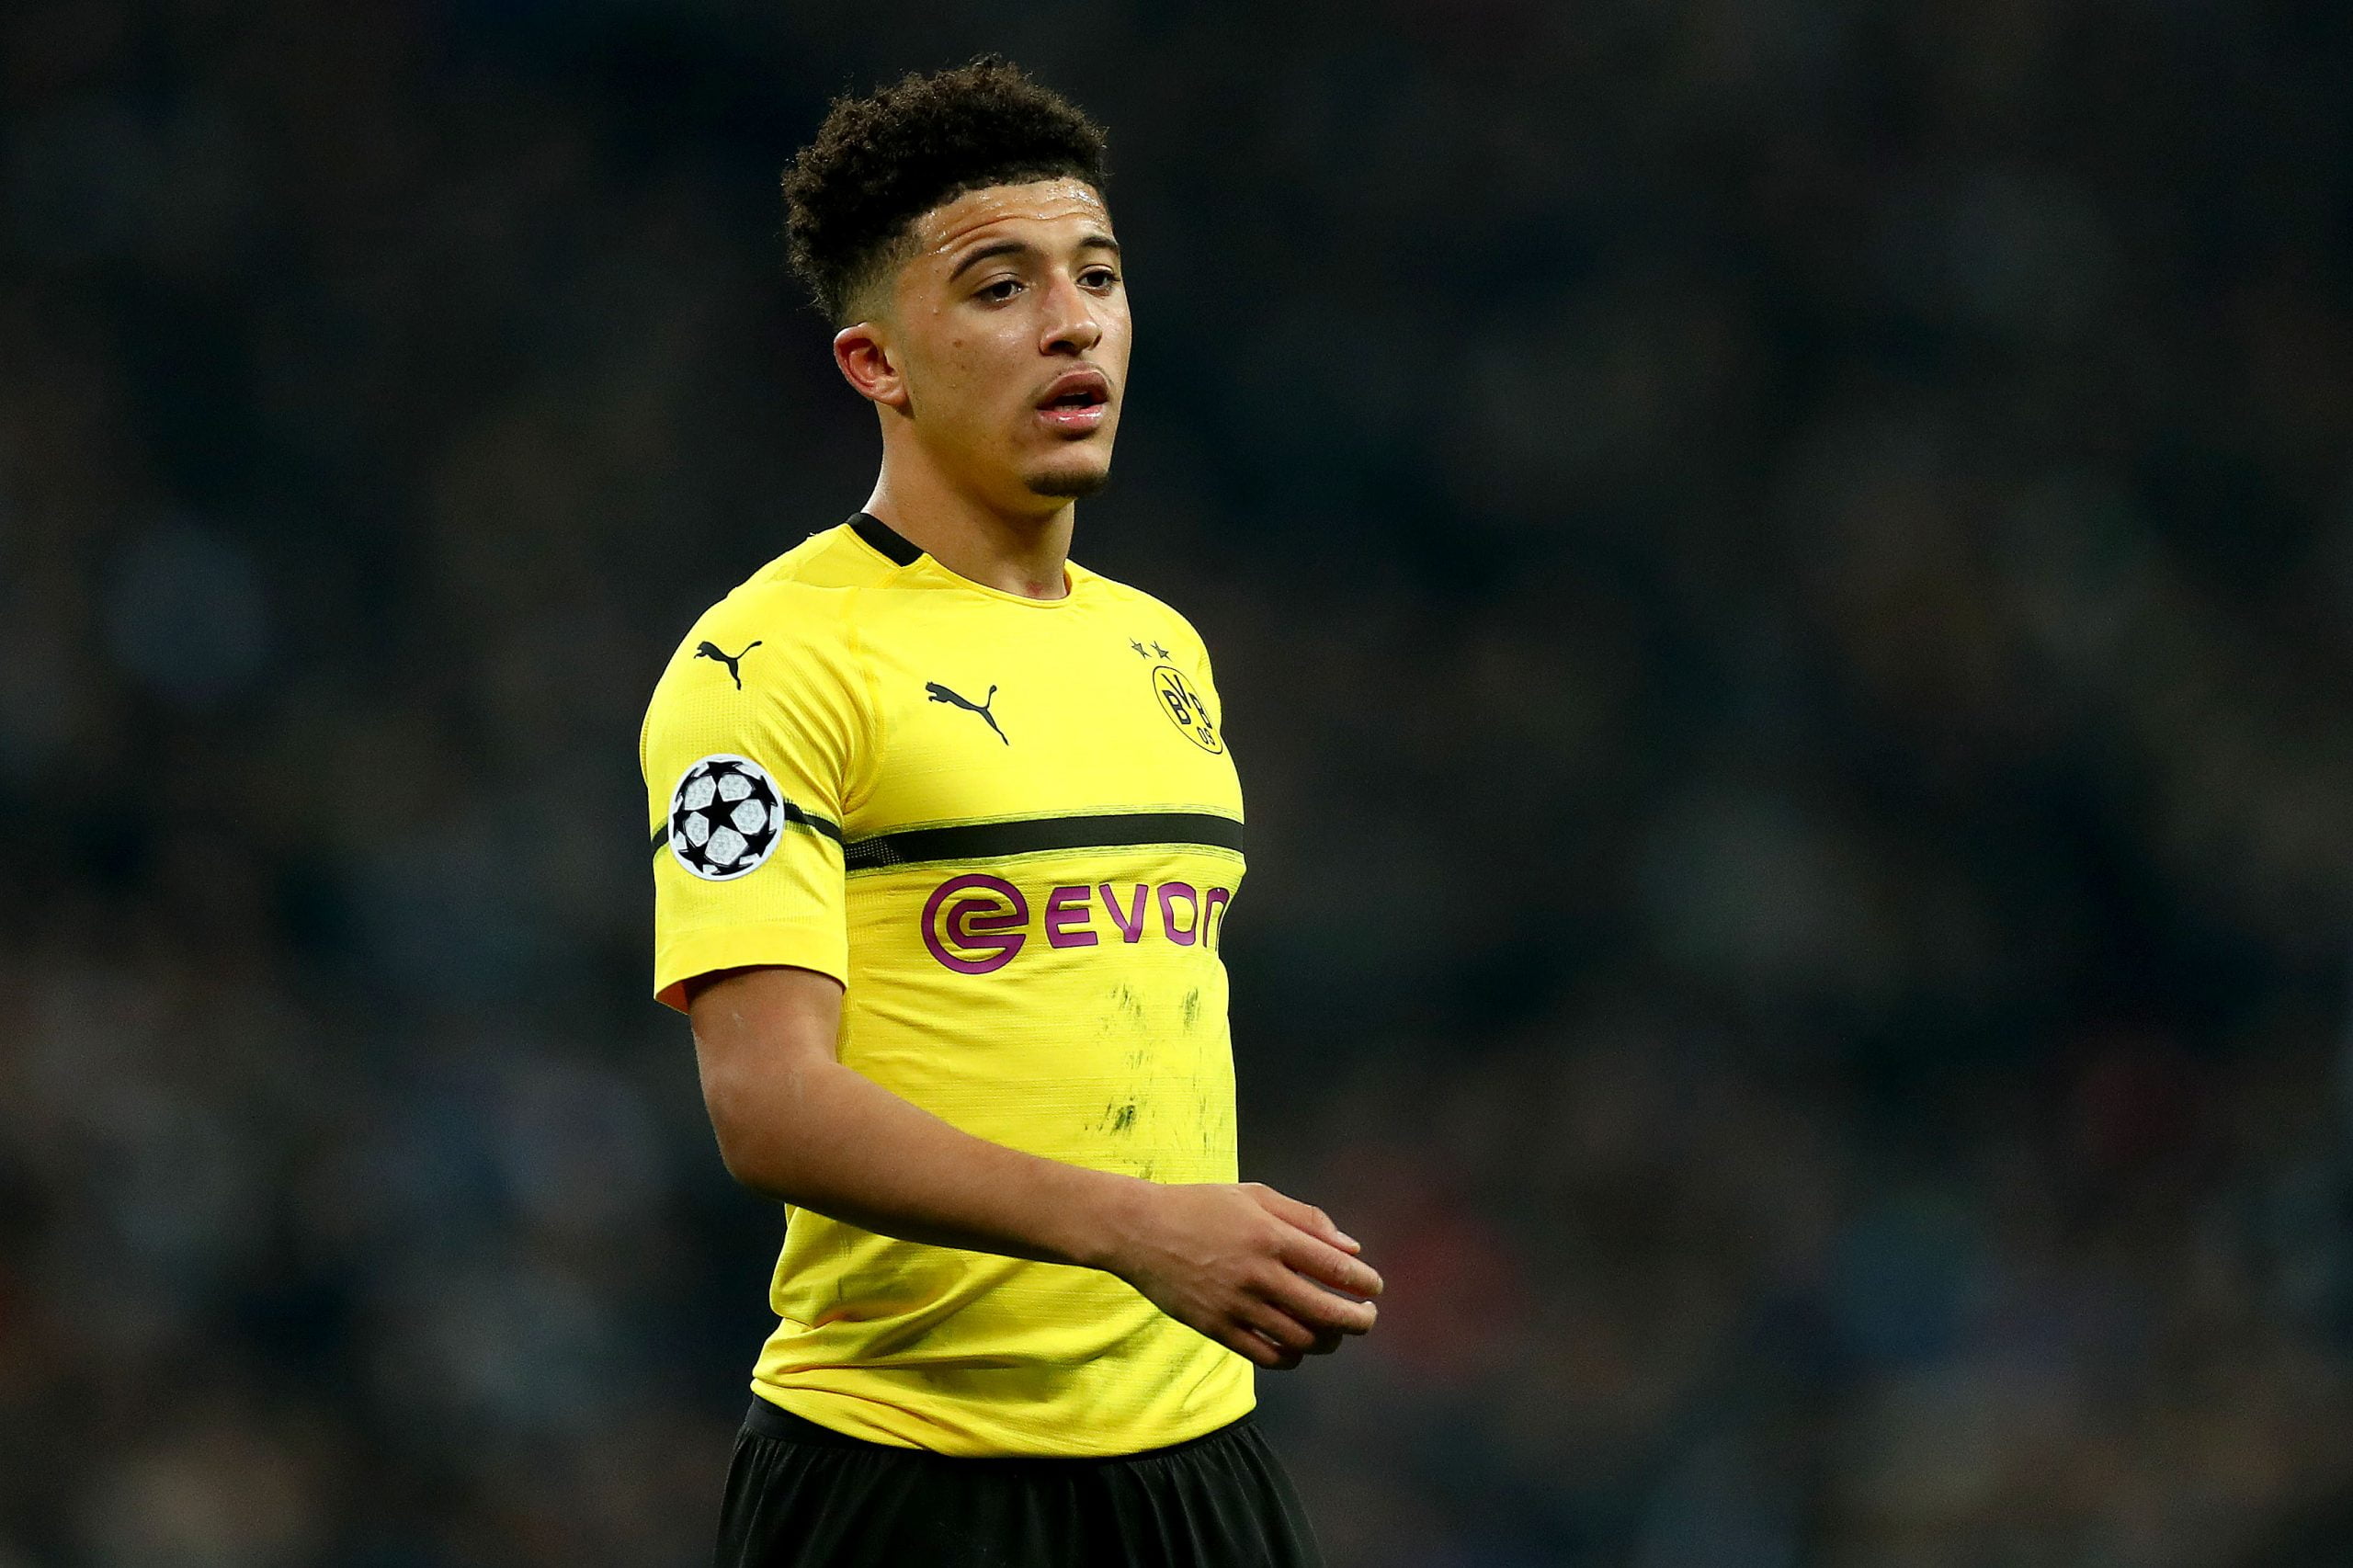 Predicted Borussia Dortmund Lineup vs Bayern Munich - Sancho set to return